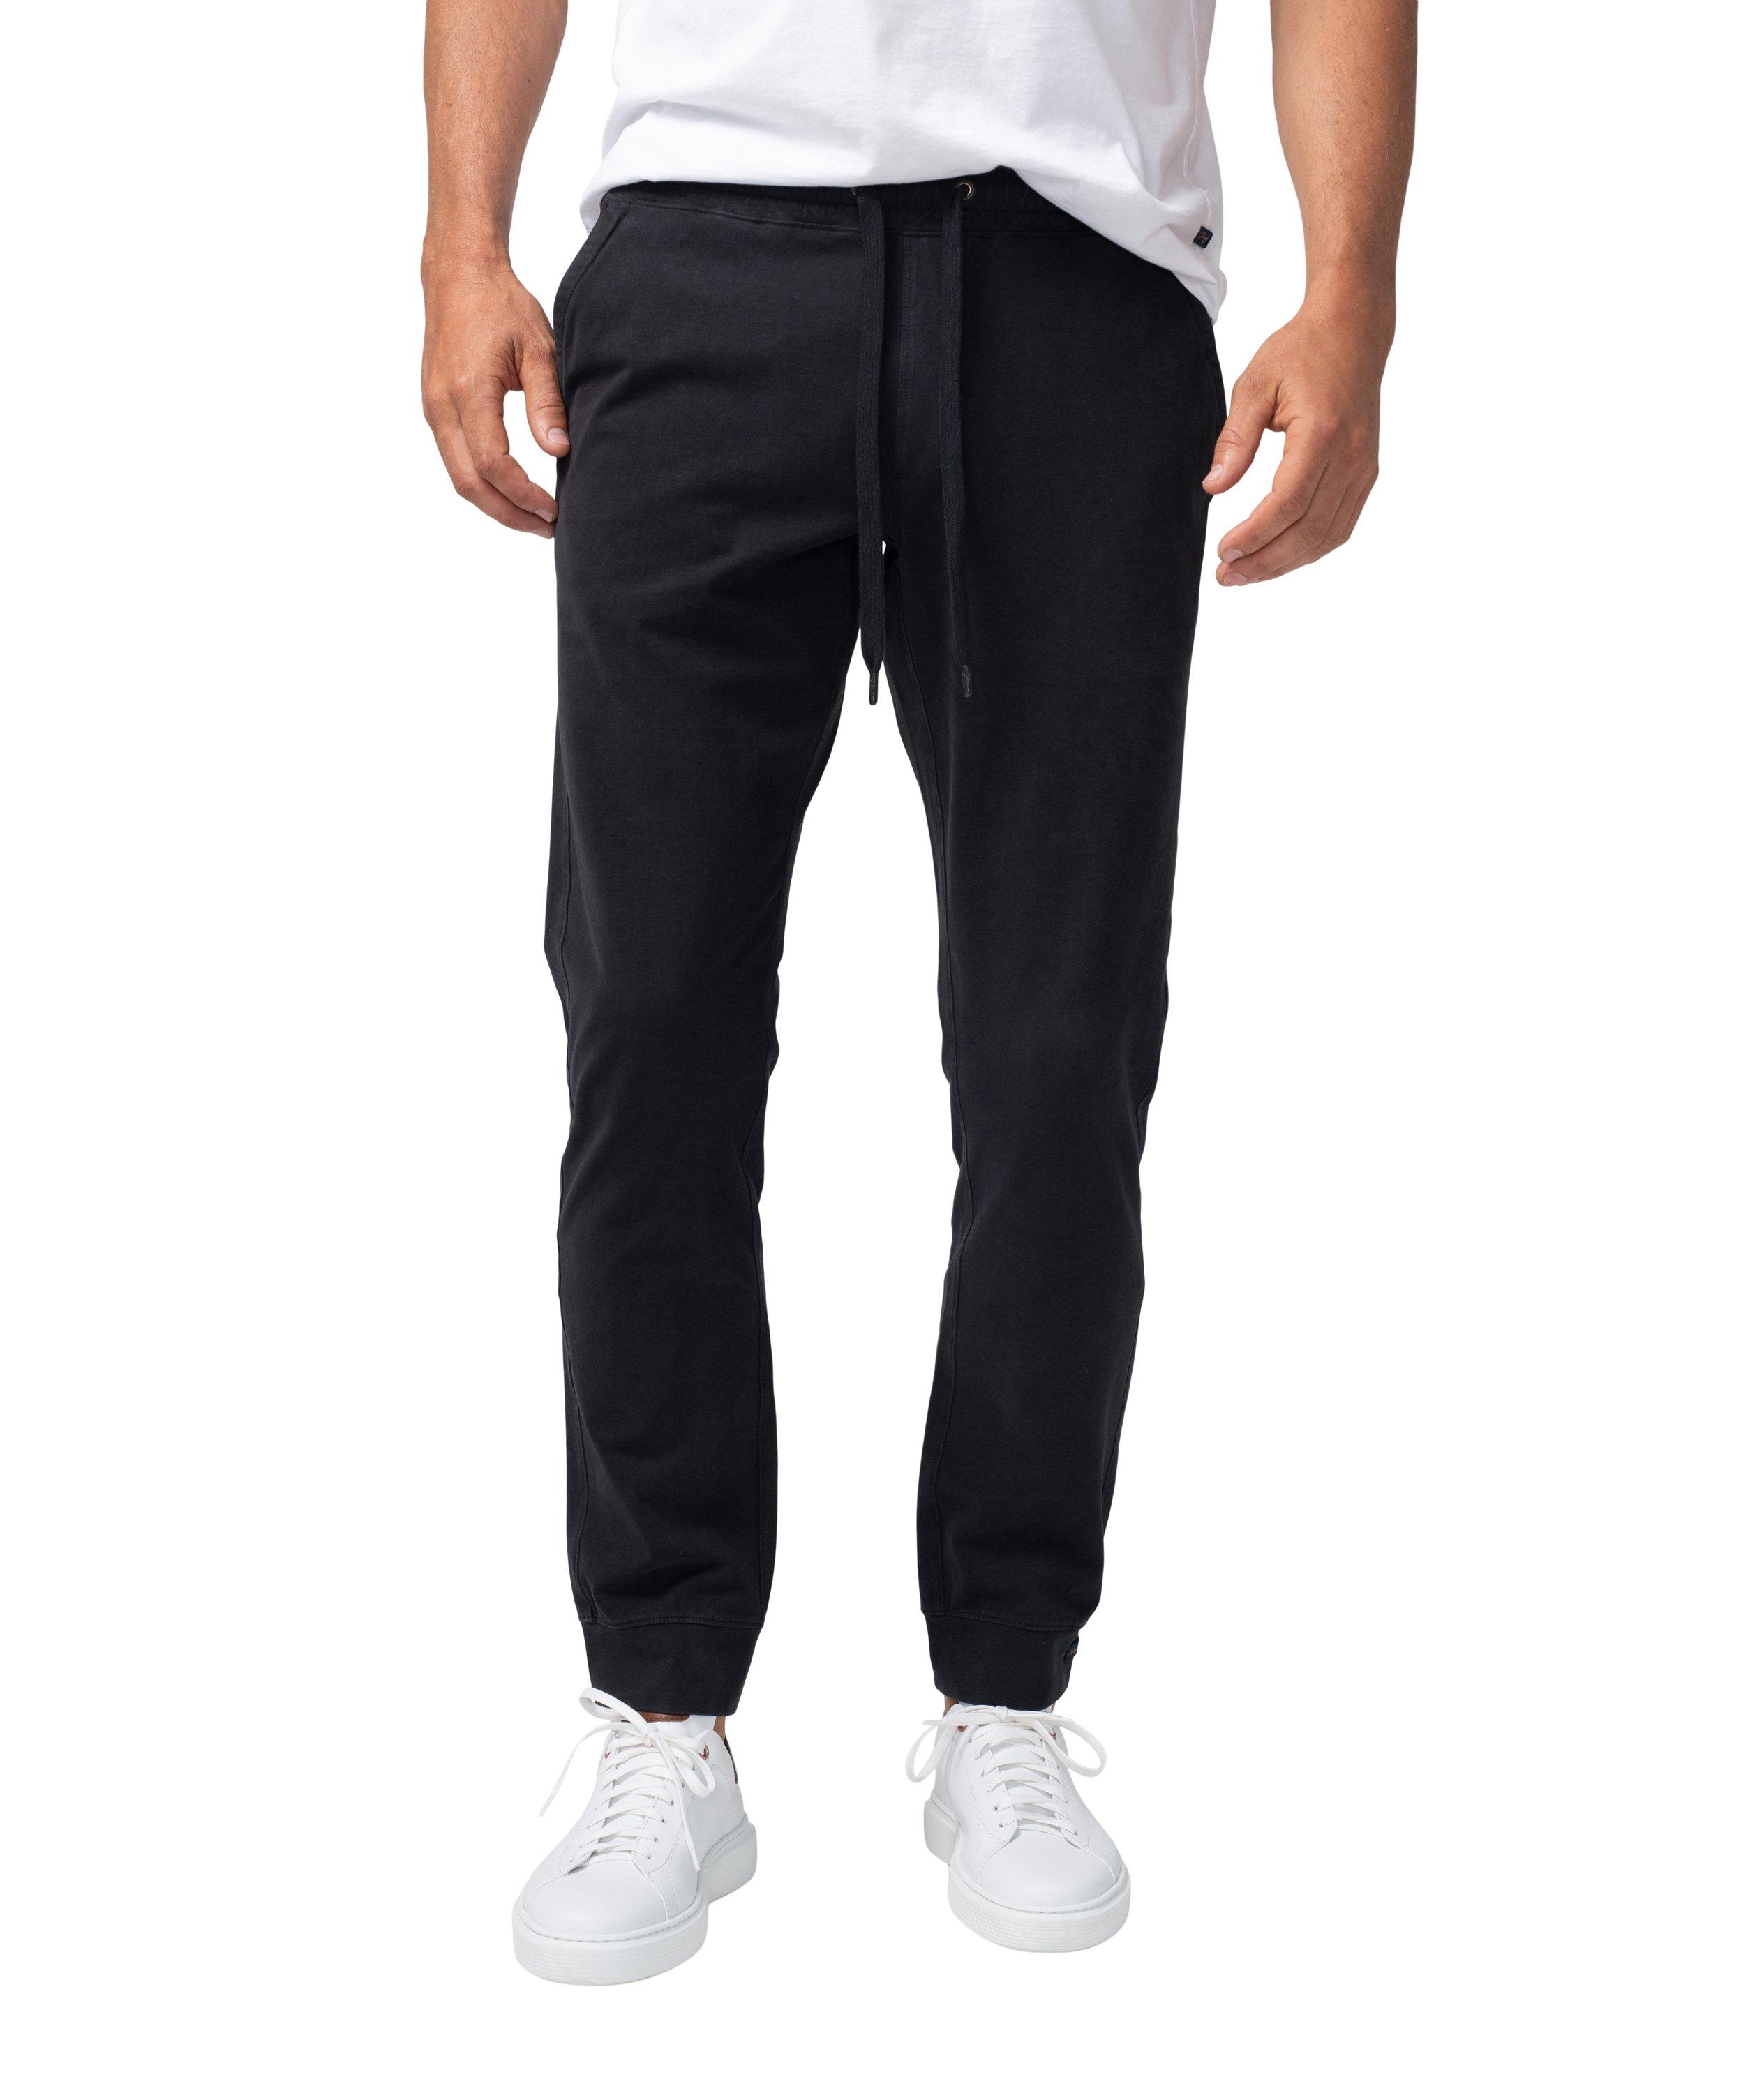 Pantalon sport en jersey Flex Pro image 0